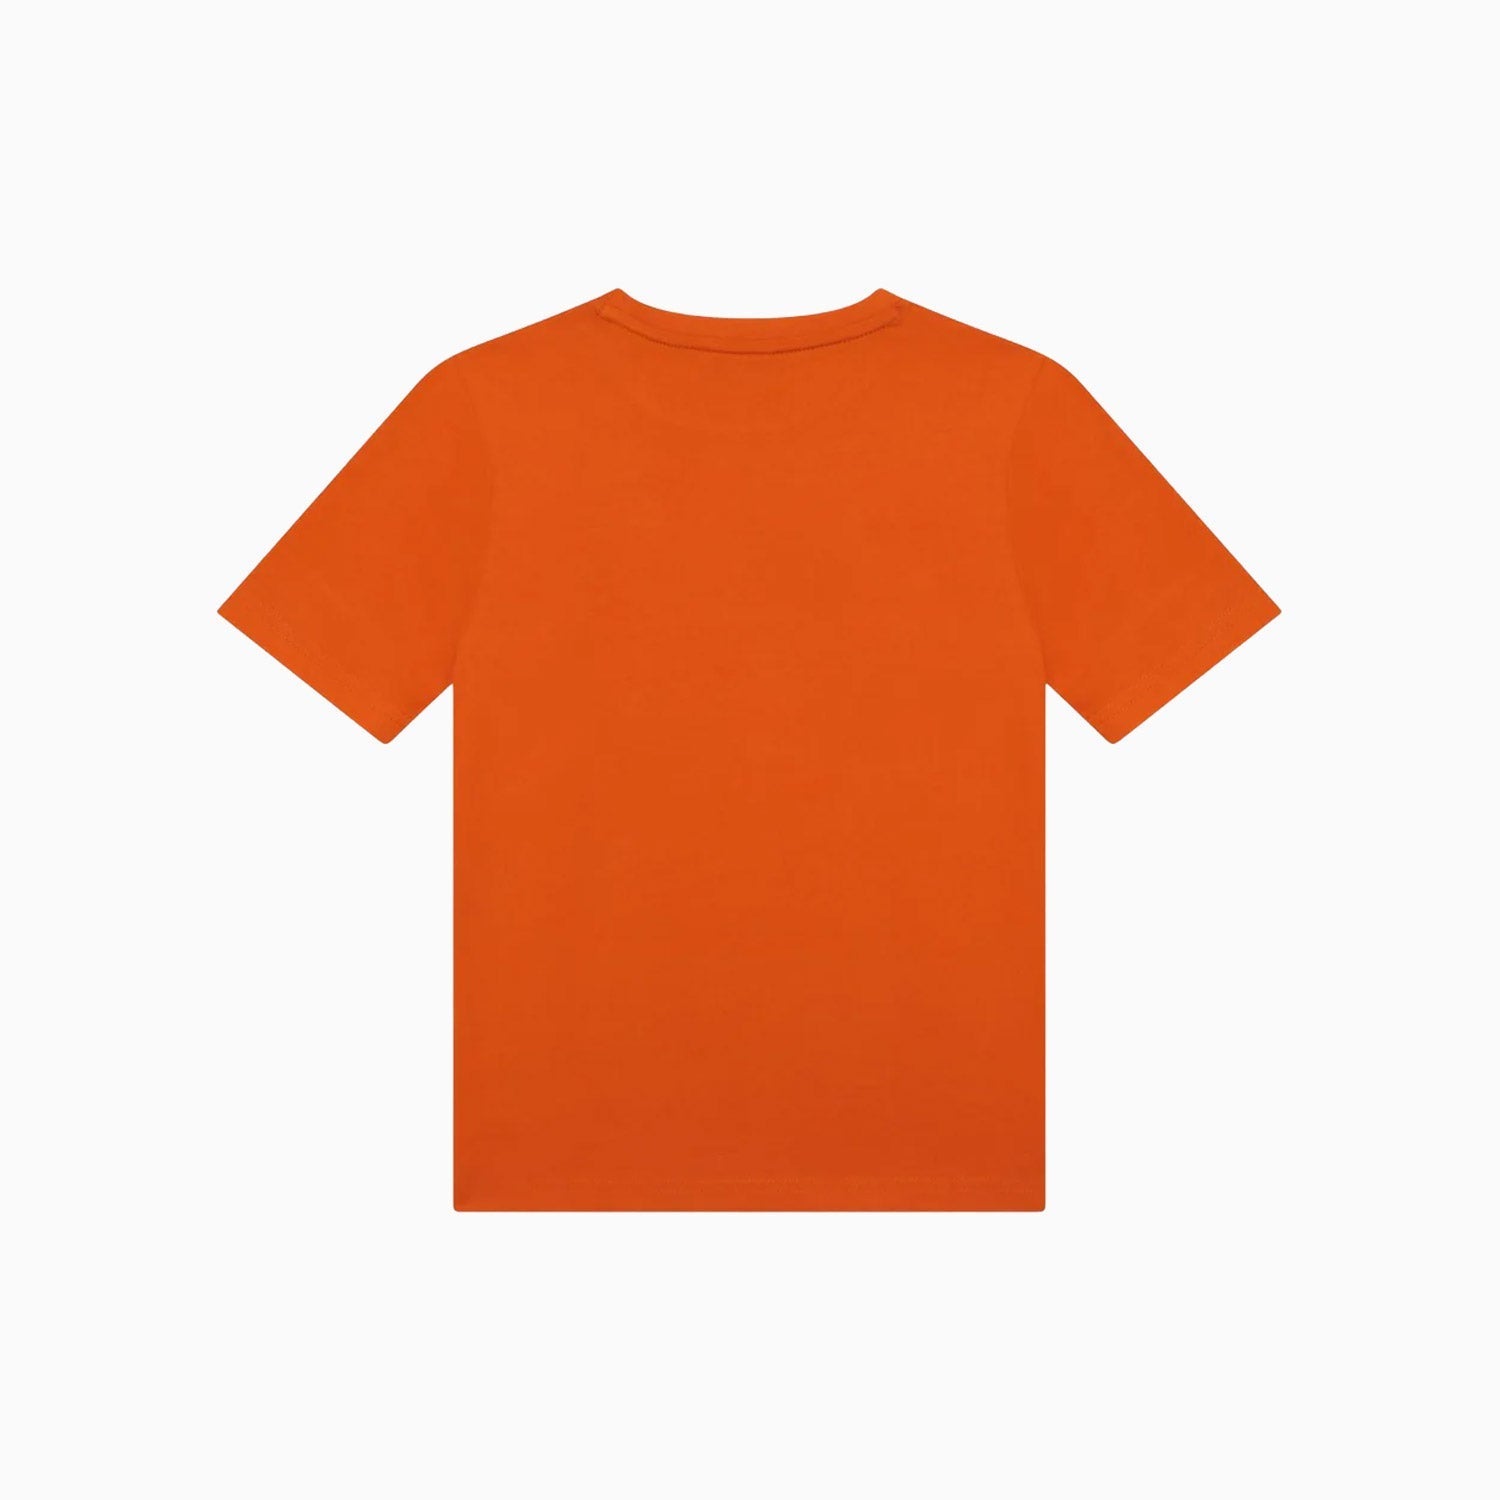 Hugo Boss Kid's Premium Big Logo Outfit - Color: Peach - Kids Premium Clothing -